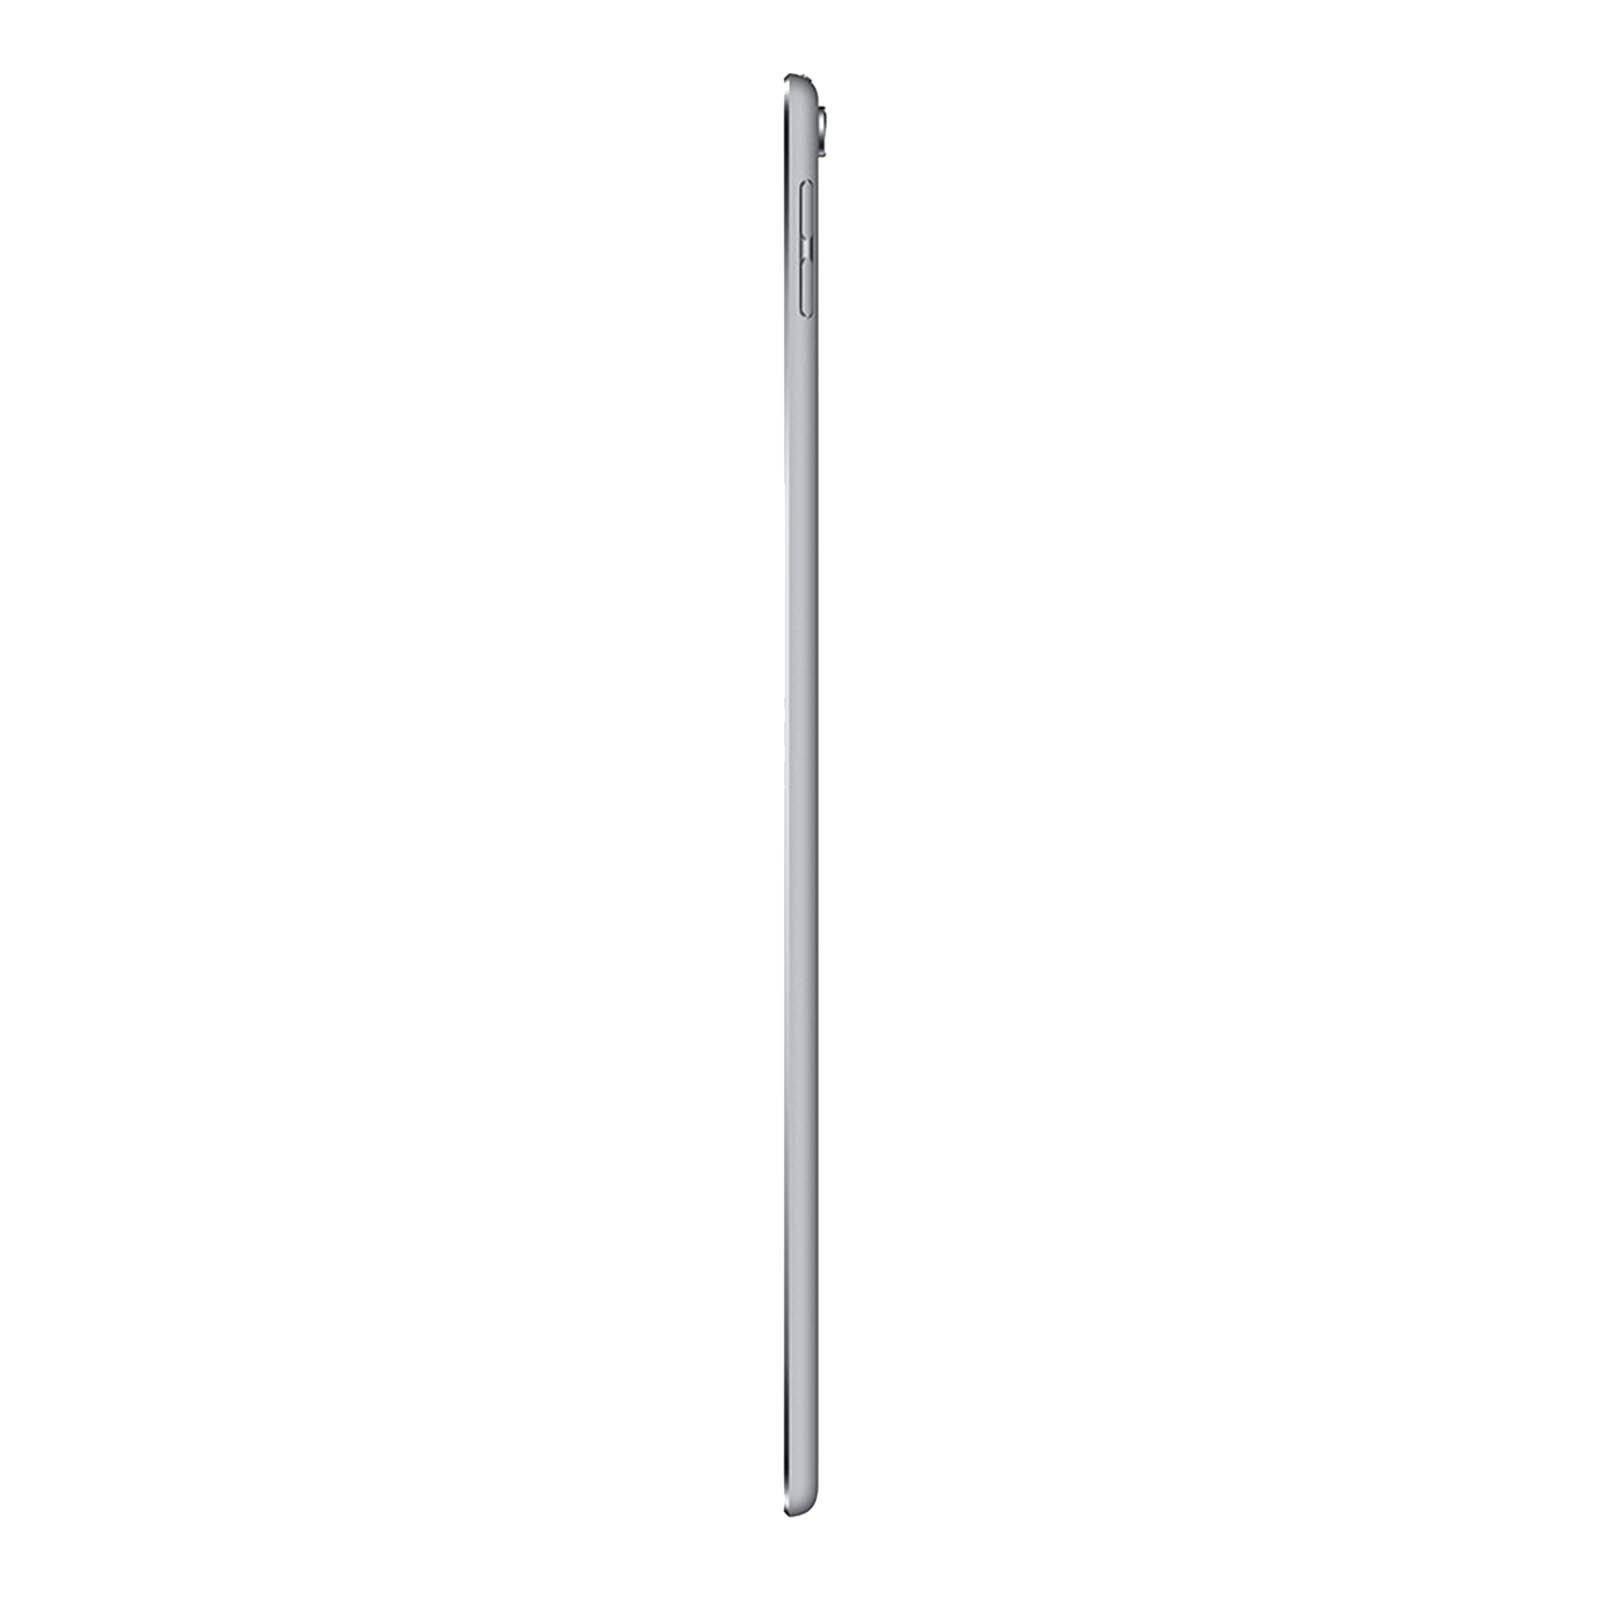 iPad Pro 10.5 Inch 512GB Space Grey Very Good - WiFi